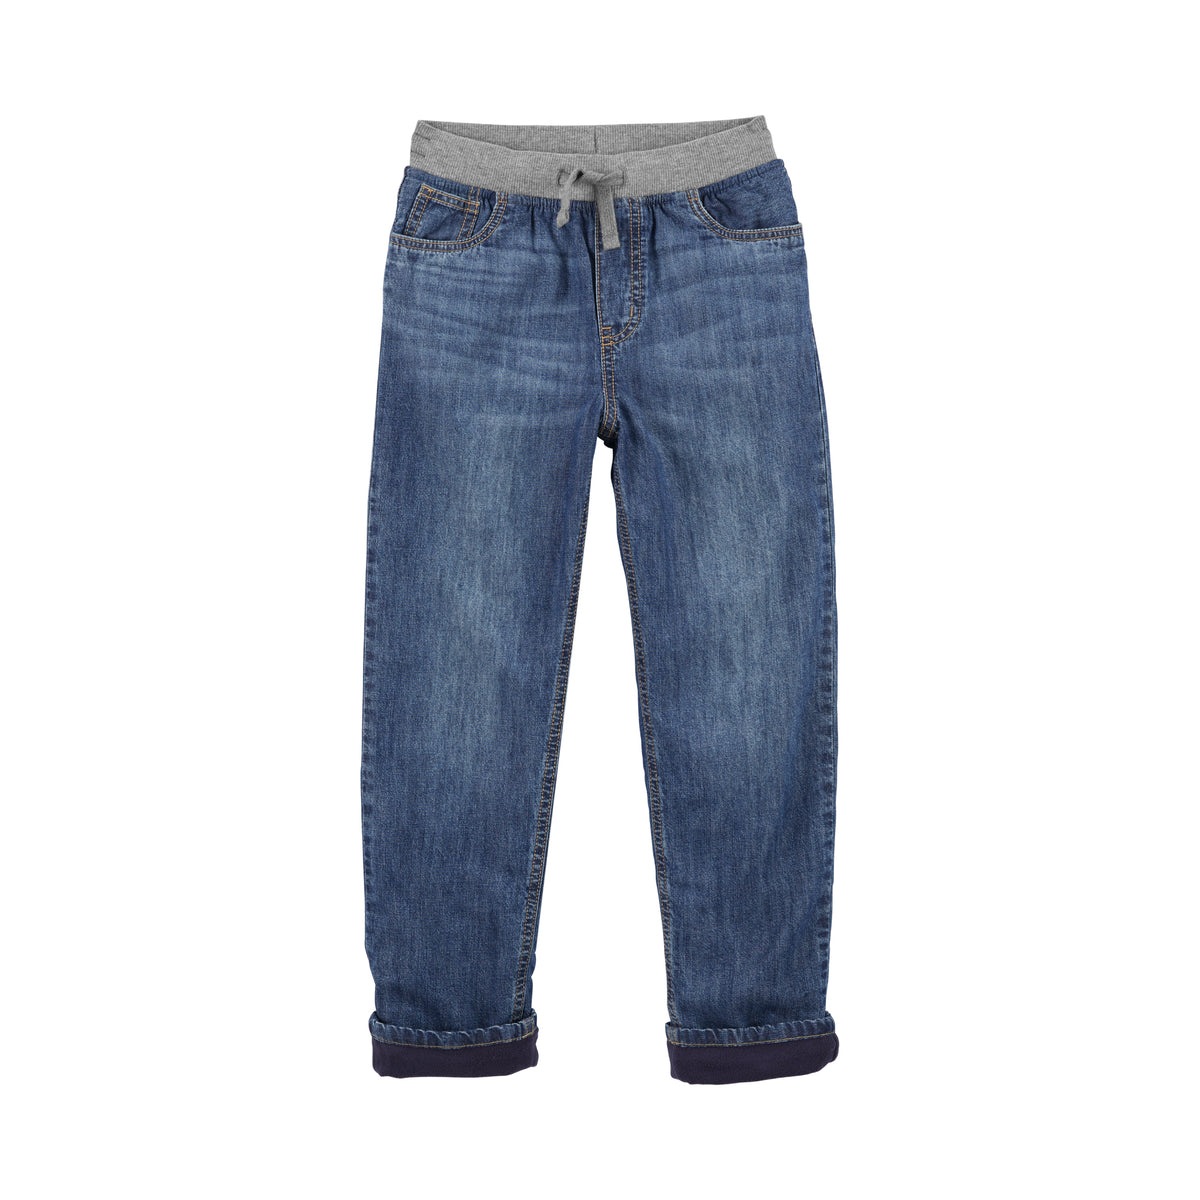 OshKosh dark blue and gray drawstring trousers (4-7)